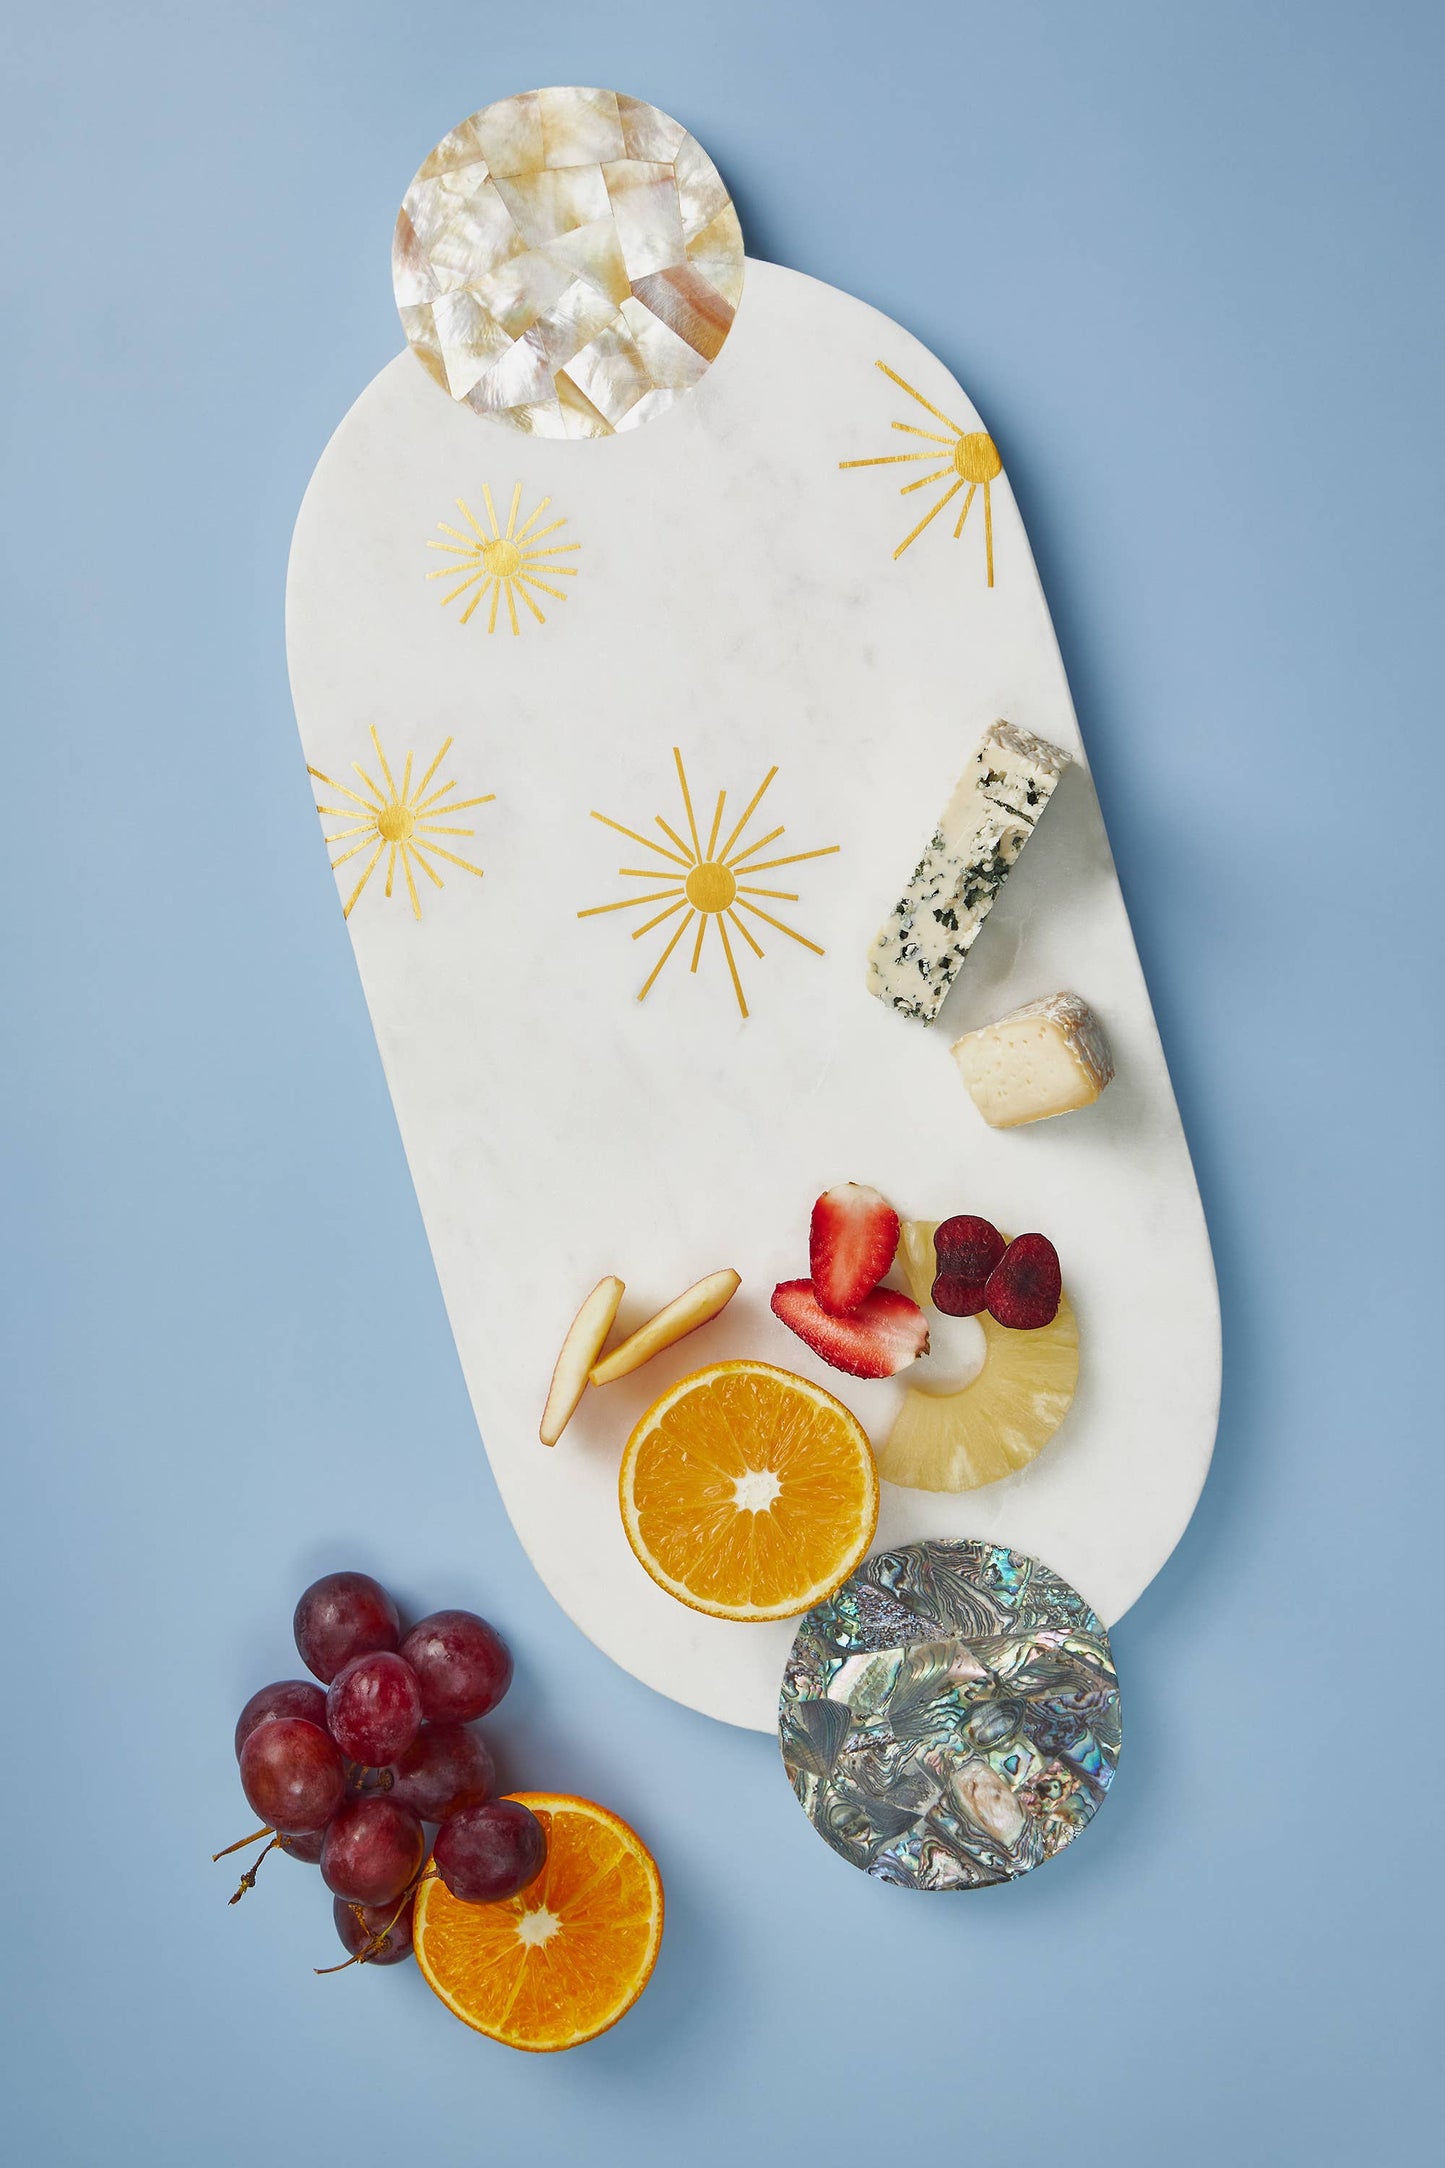 GAURI KOHLI - Montenegro Marble Cheese Board